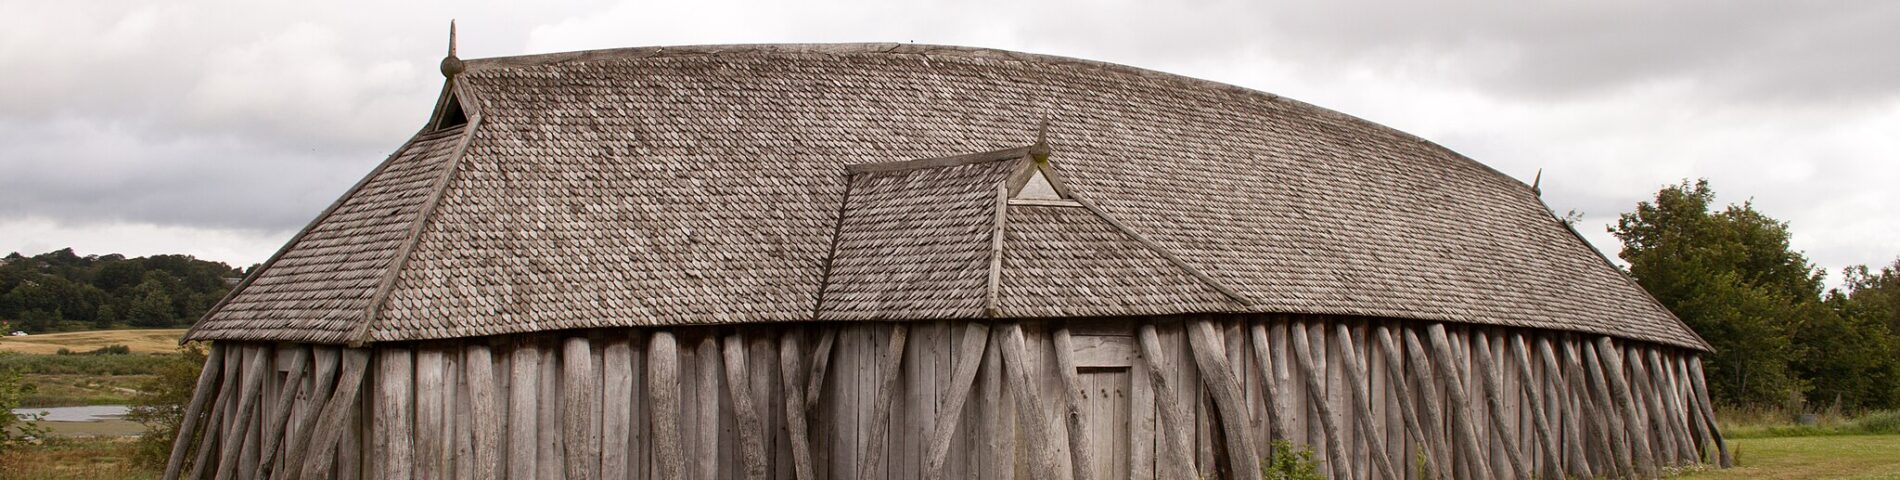 Reconstrucción de una casa vikinga en Fyrkat